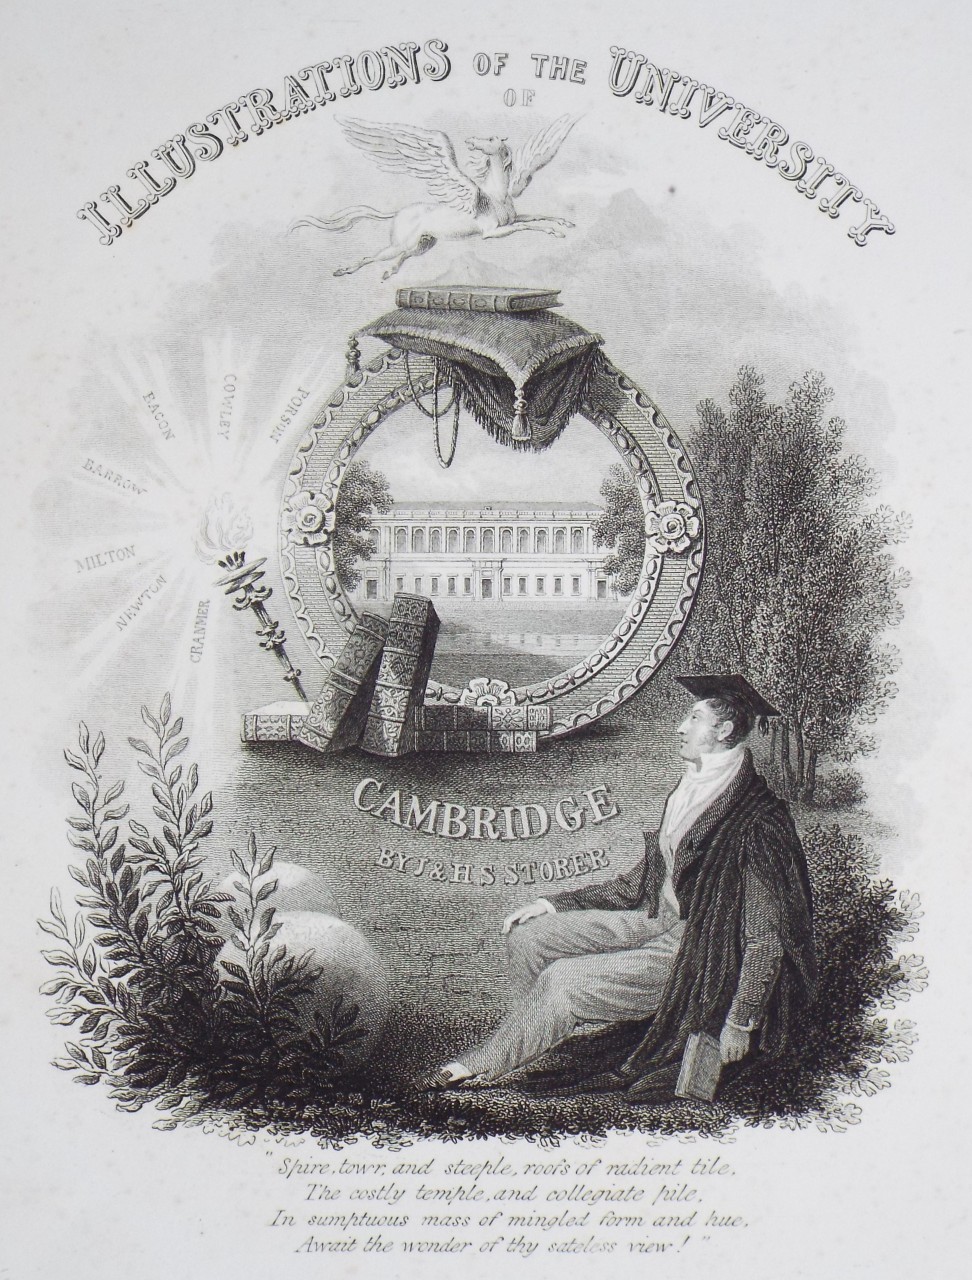 Print - Illustrations of the University of Cambridge - Storer